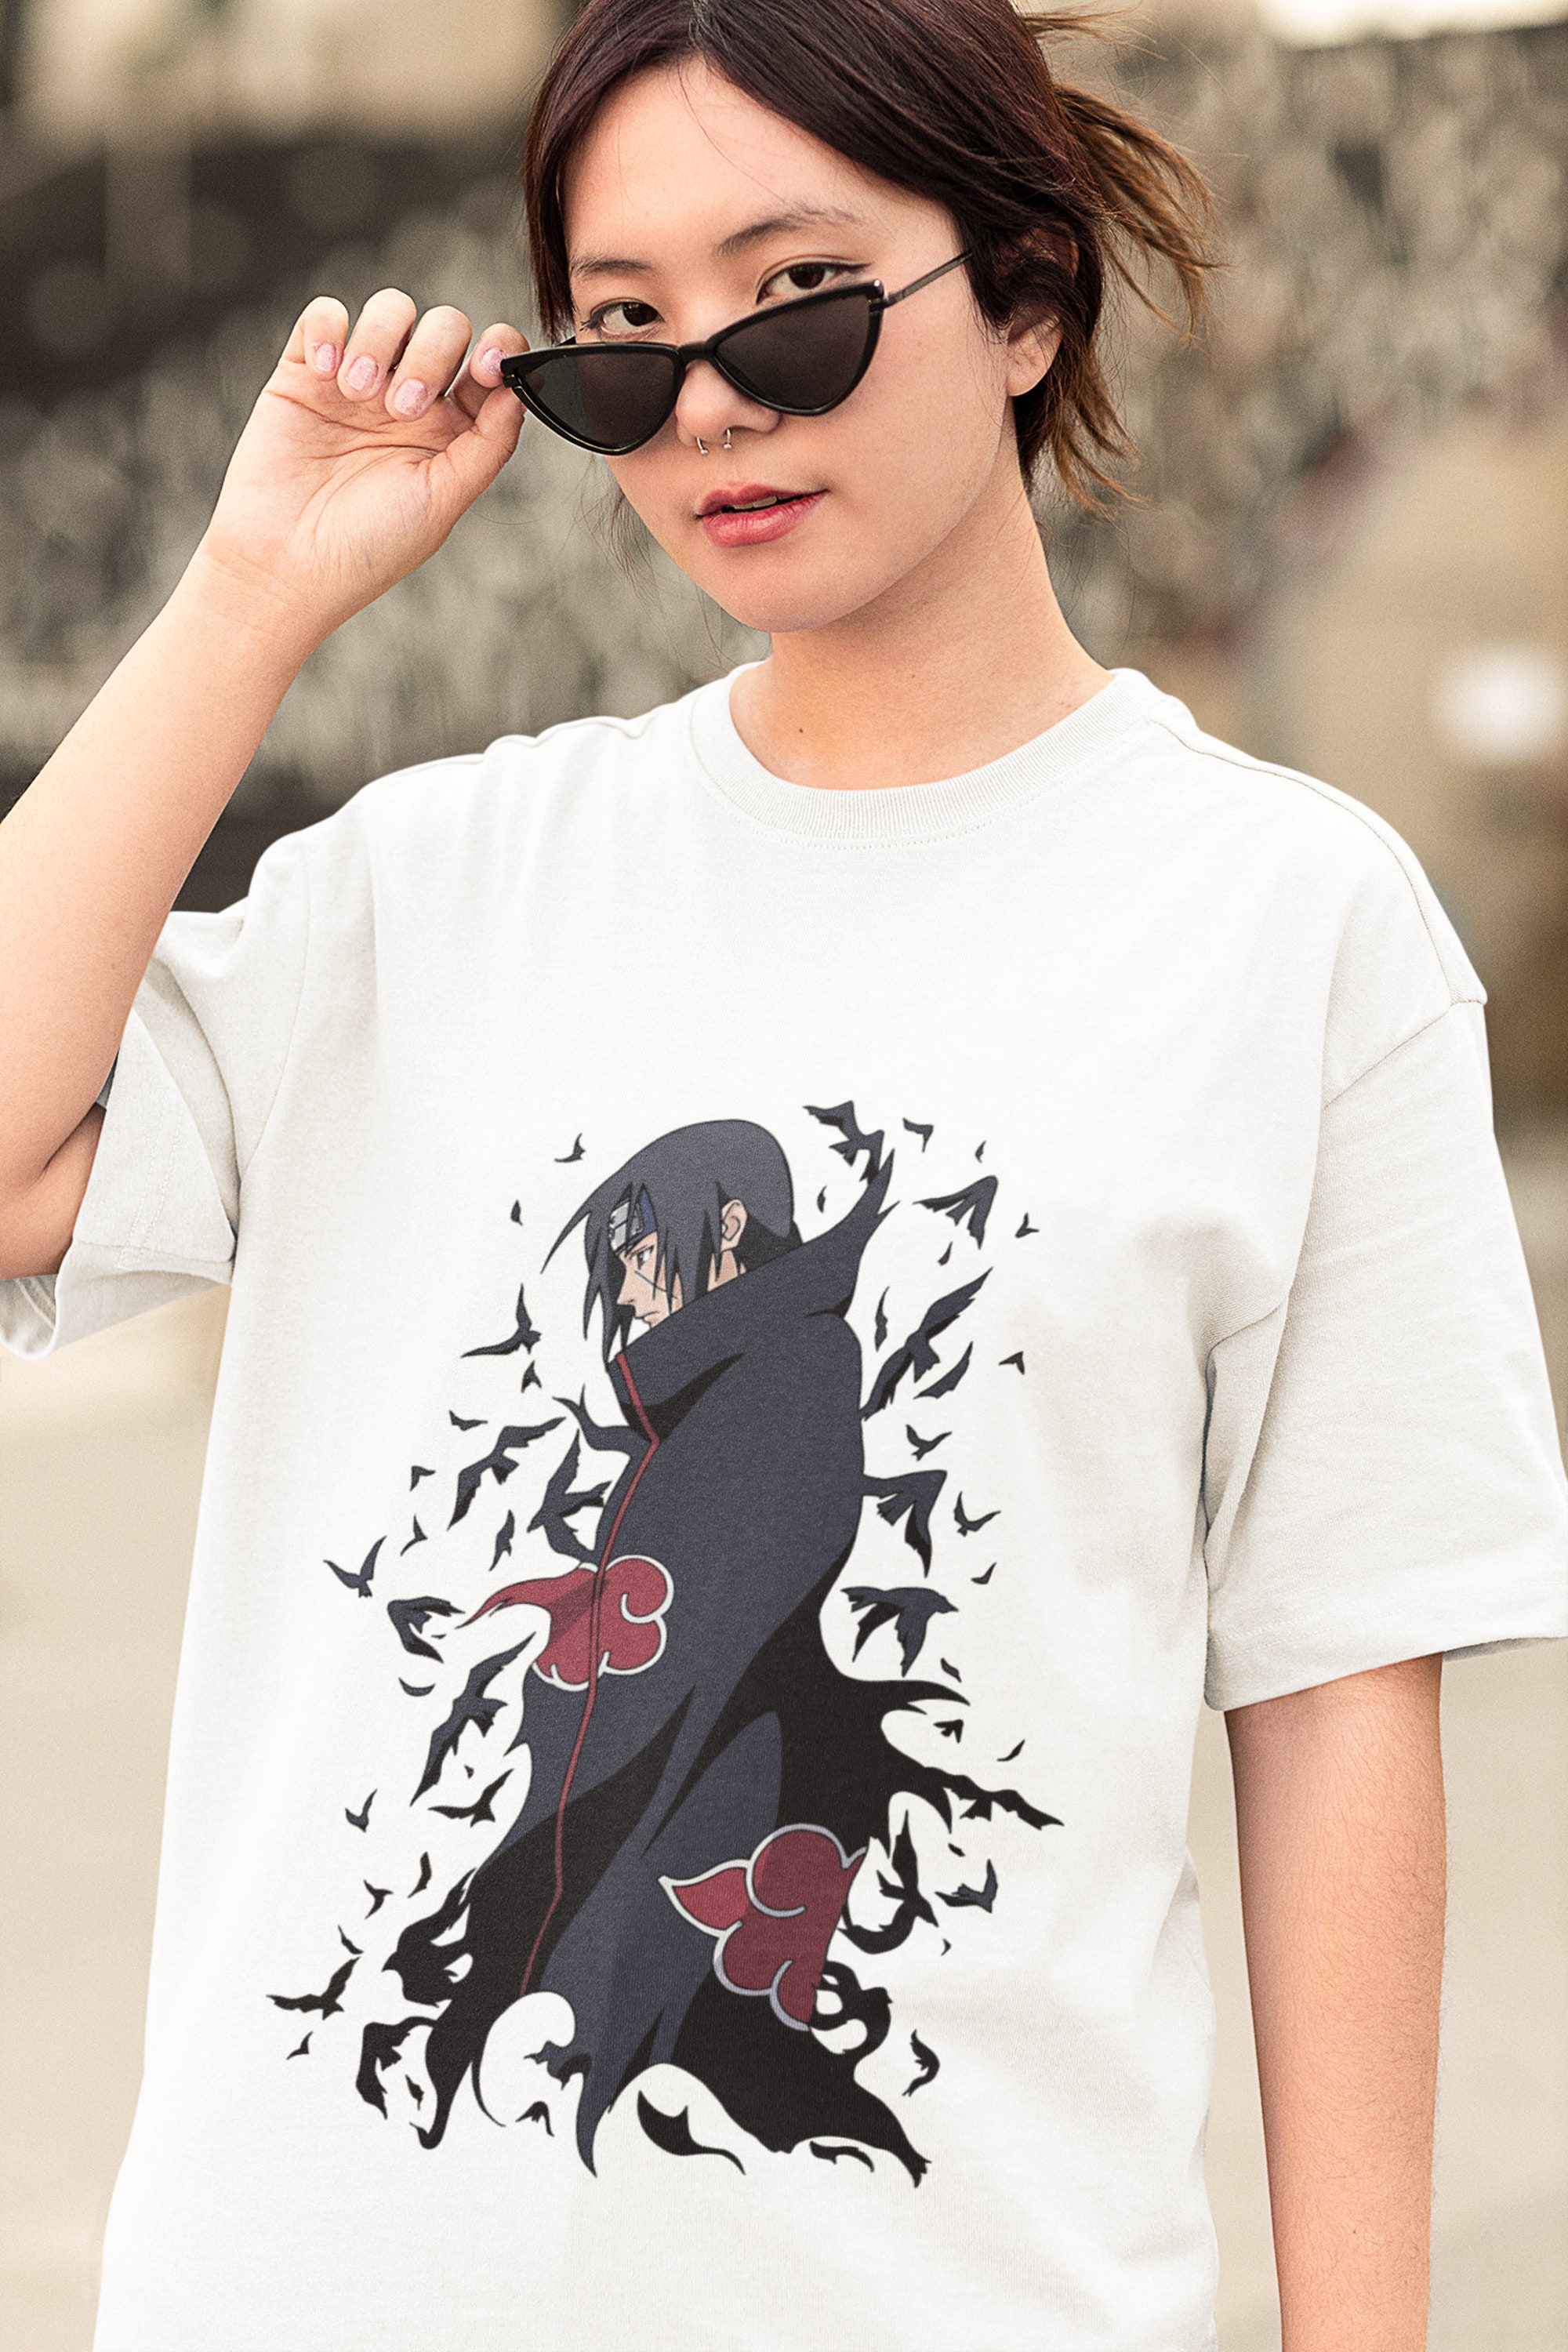 Discover Naruto Anime Unisex Graphic Tee, Itachi T-Shirt, Itachi Naruto, Naruto T-Shirts